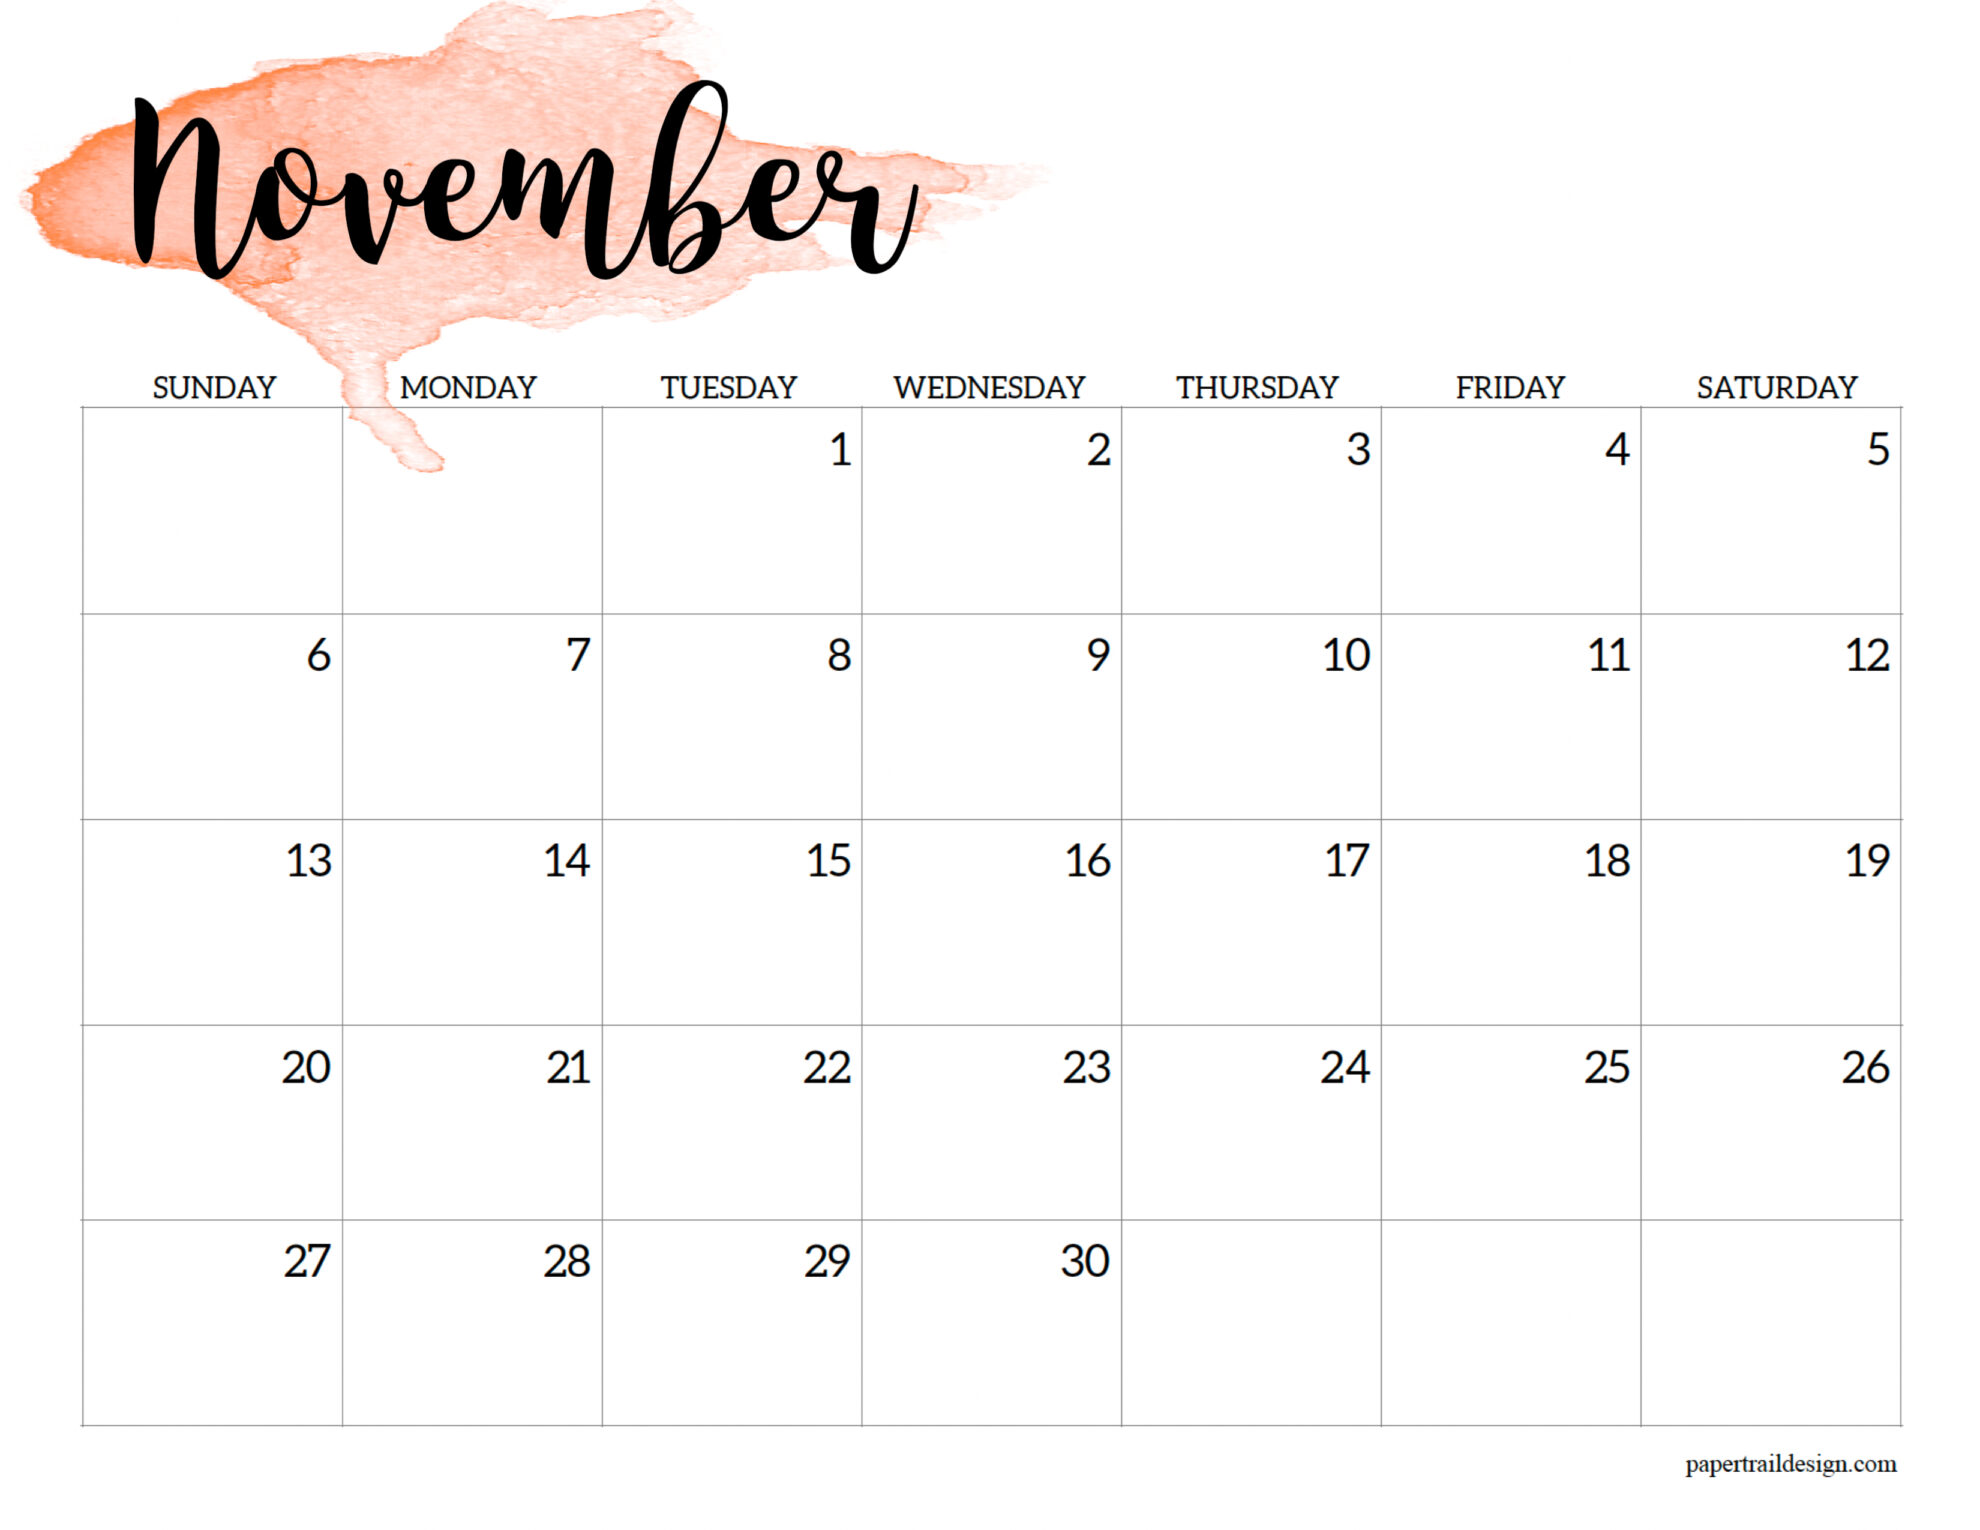 November Calendar Template 2022 2022 Calendar Printable - Watercolor - Paper Trail Design